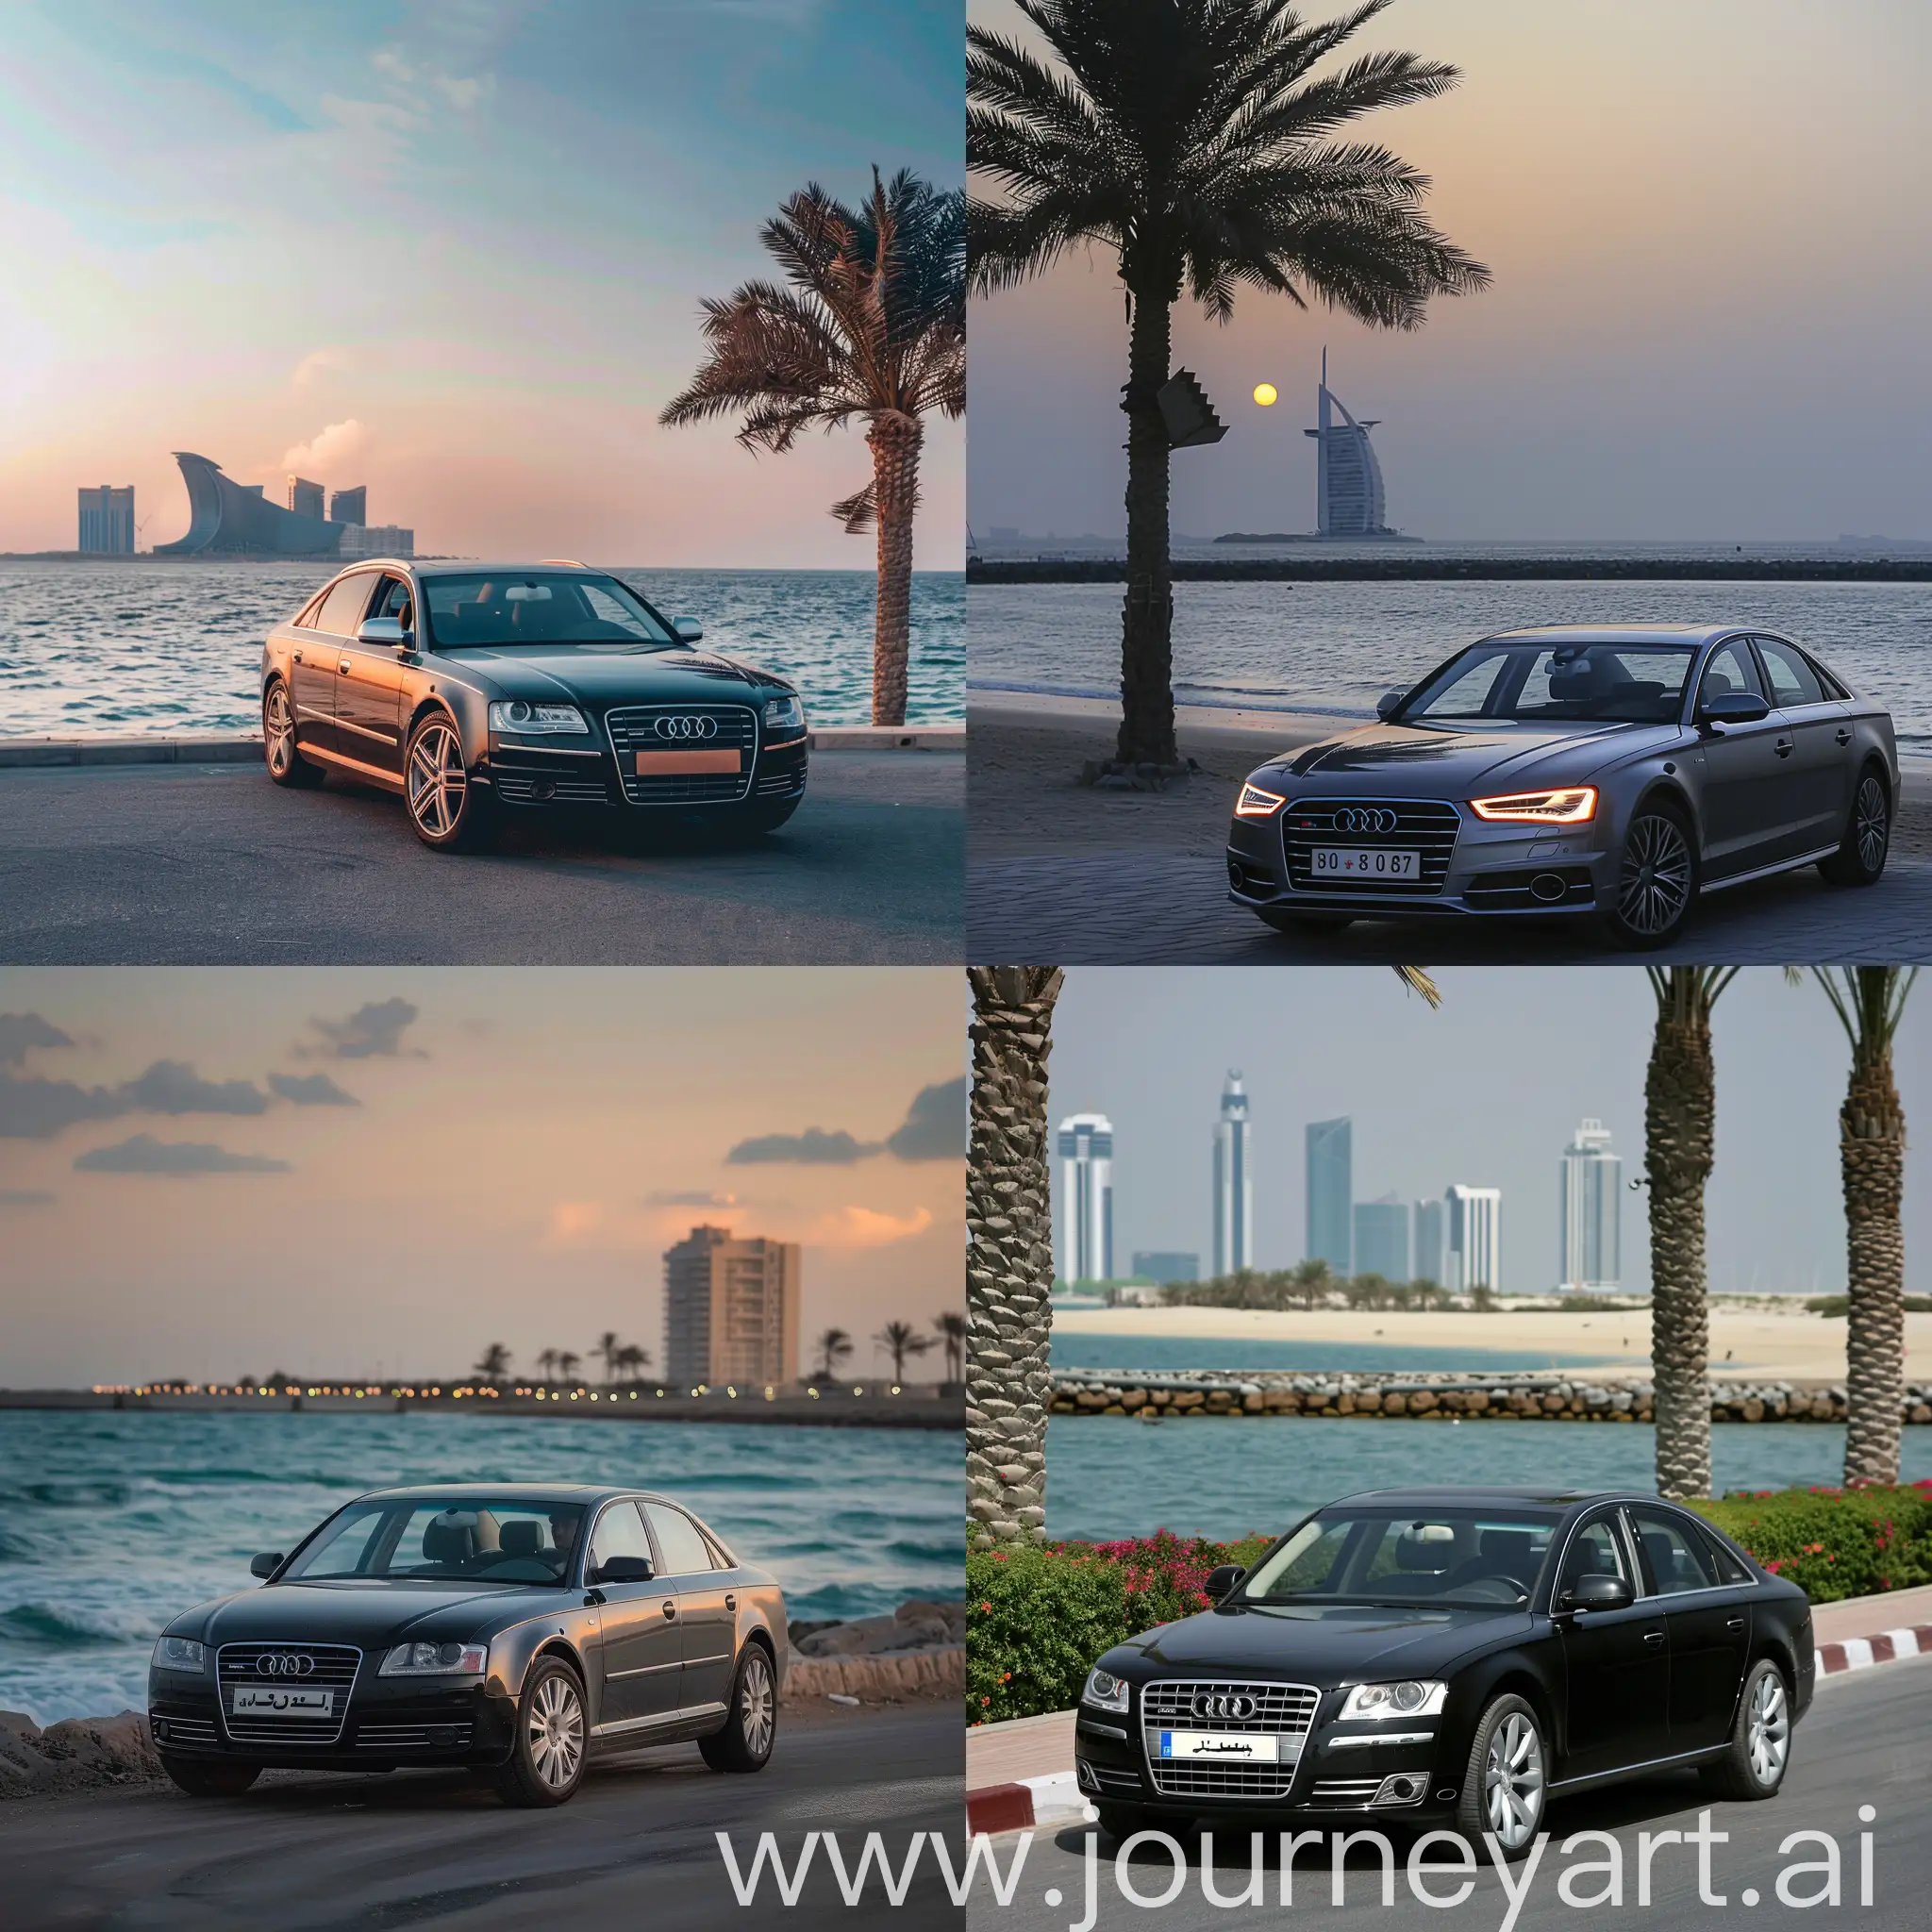 Luxurious-Middle-Eastern-Seaside-Drive-AudiInspired-FourDoor-Household-Car